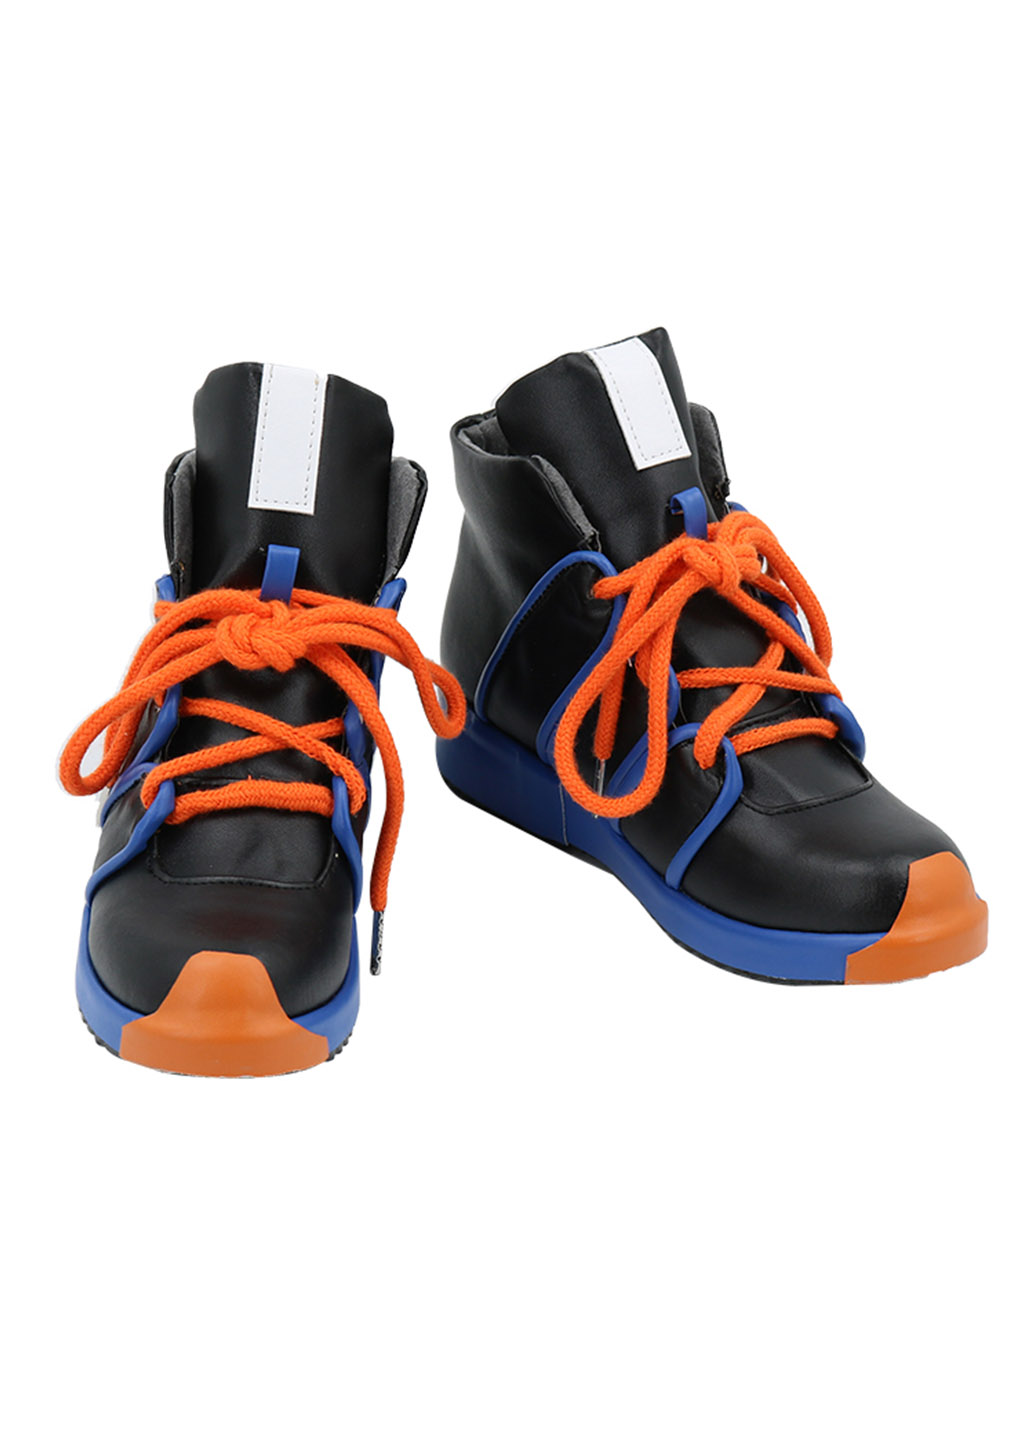 Hololive Shoes Virtual YouTuber Takanashi Kiara Boots Cosplay